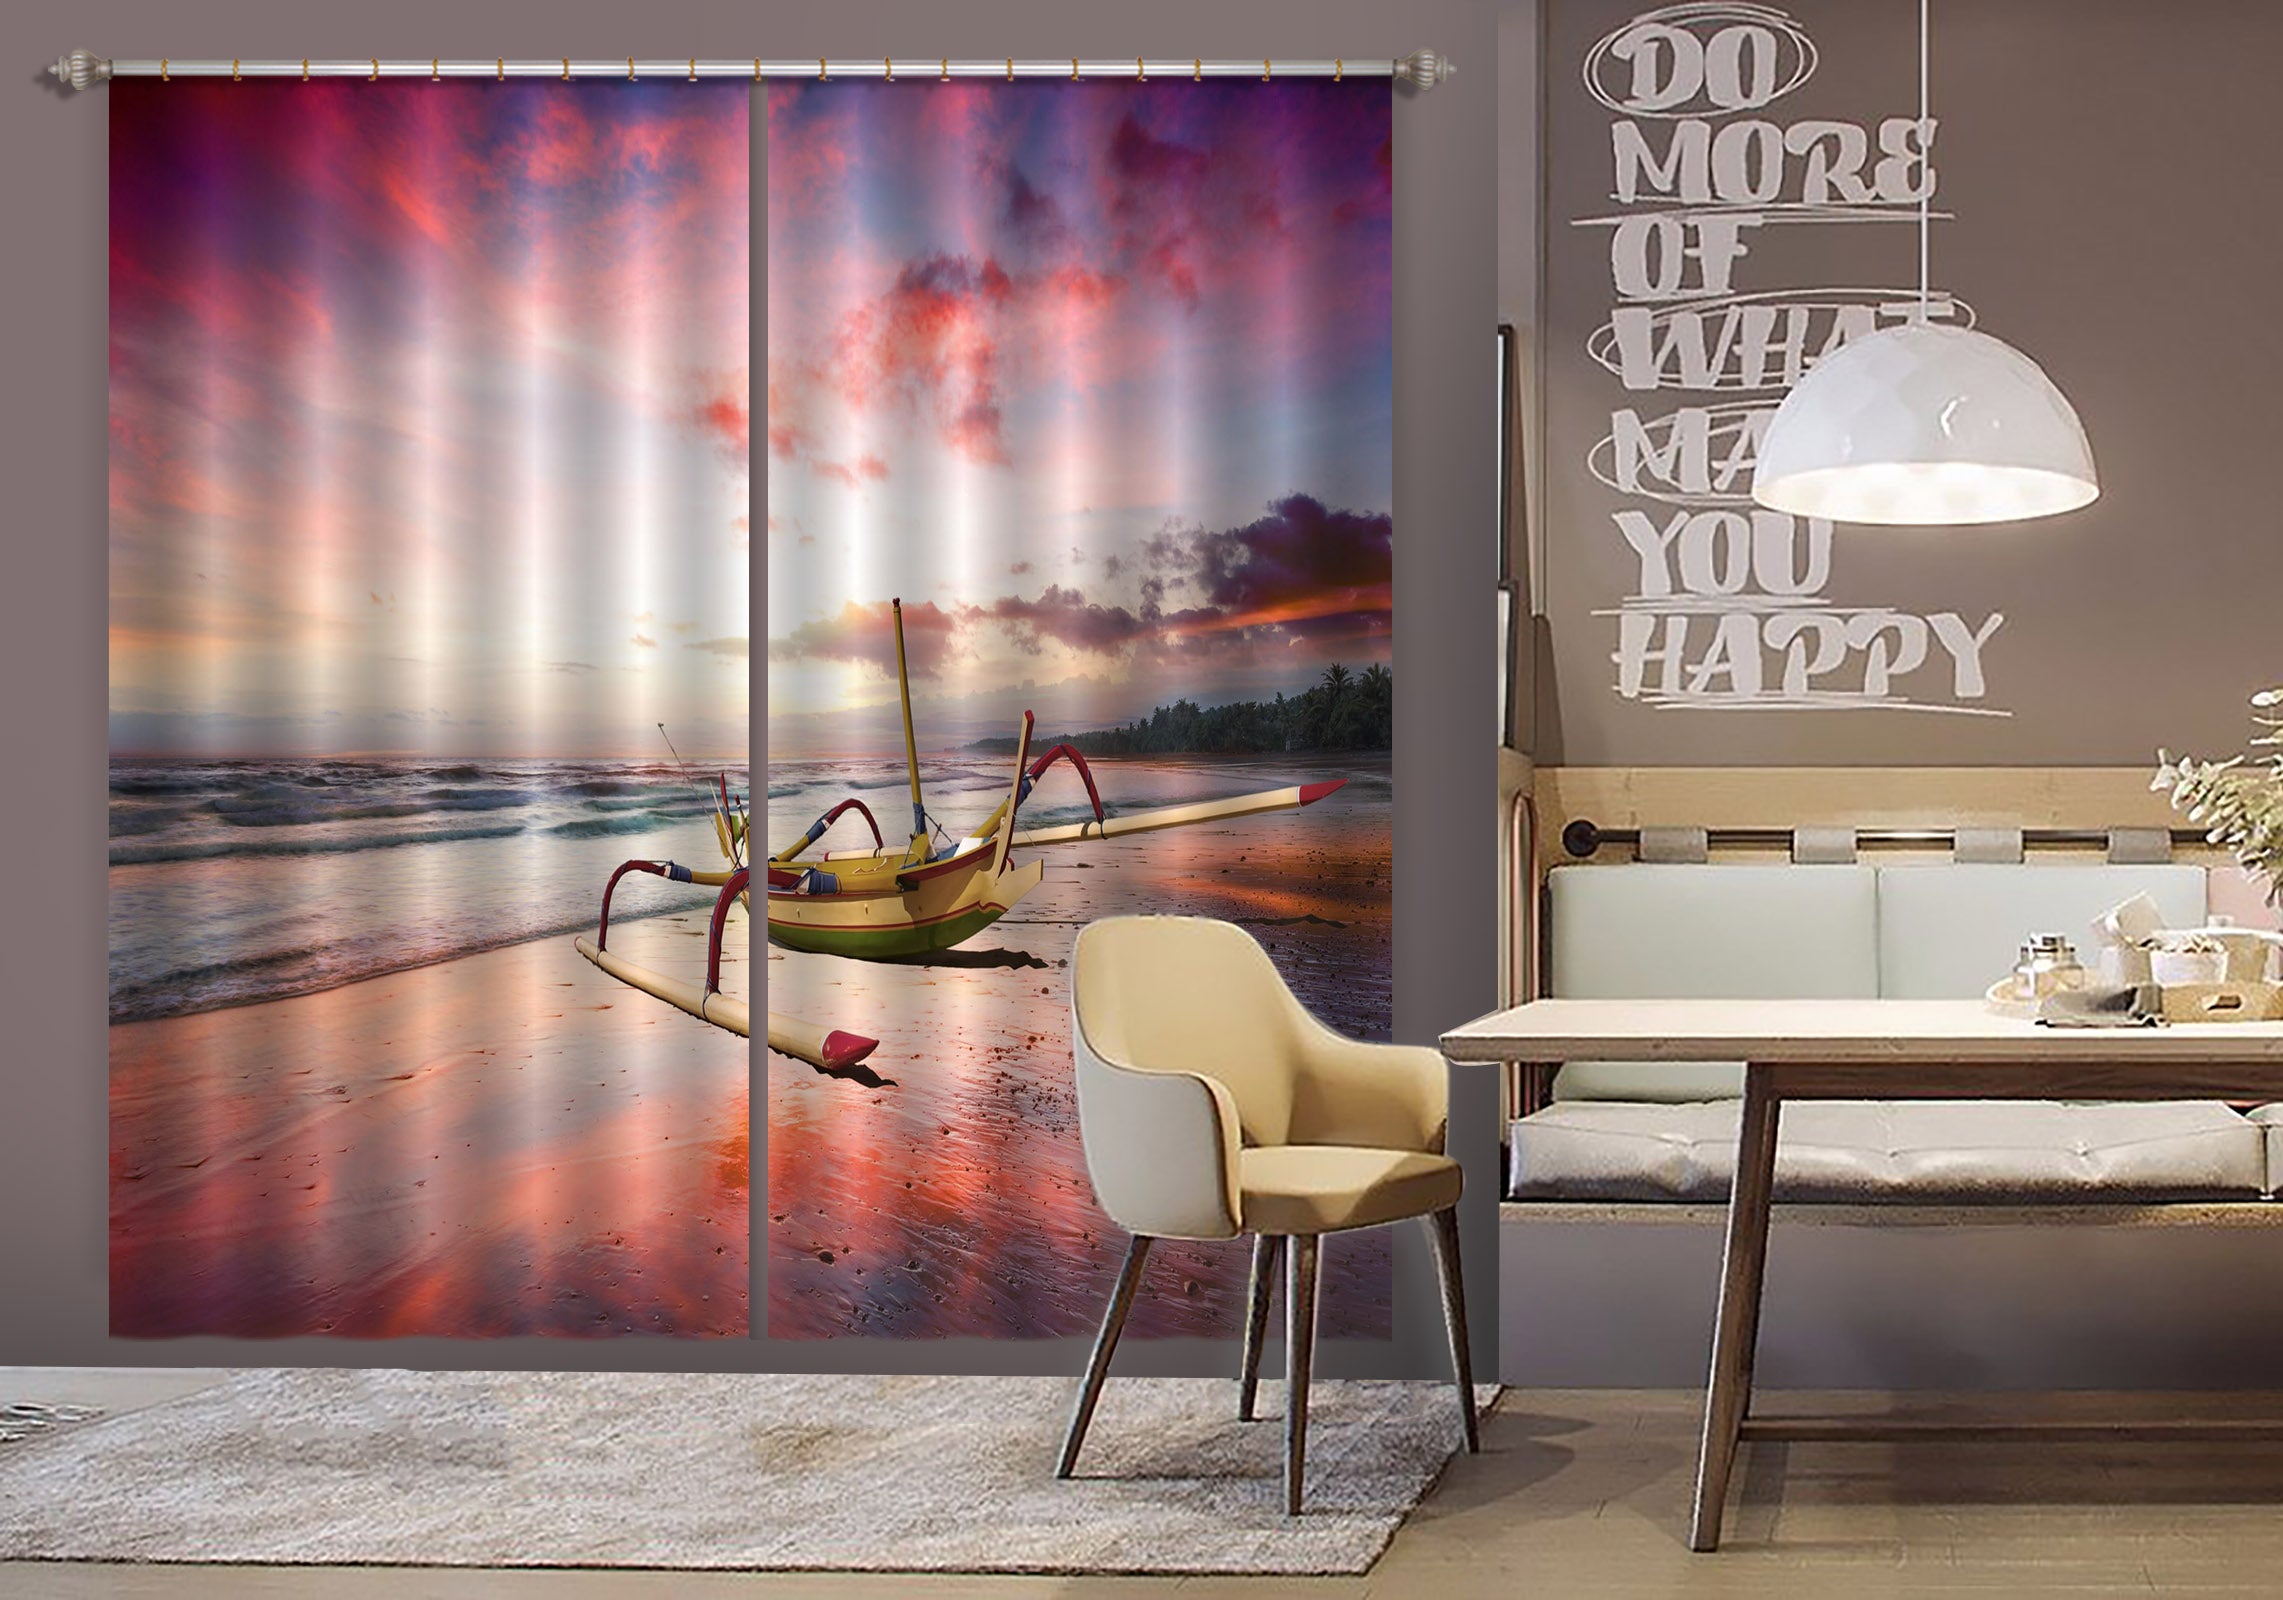 3D Sunset Beach 075 Marco Carmassi Curtain Curtains Drapes